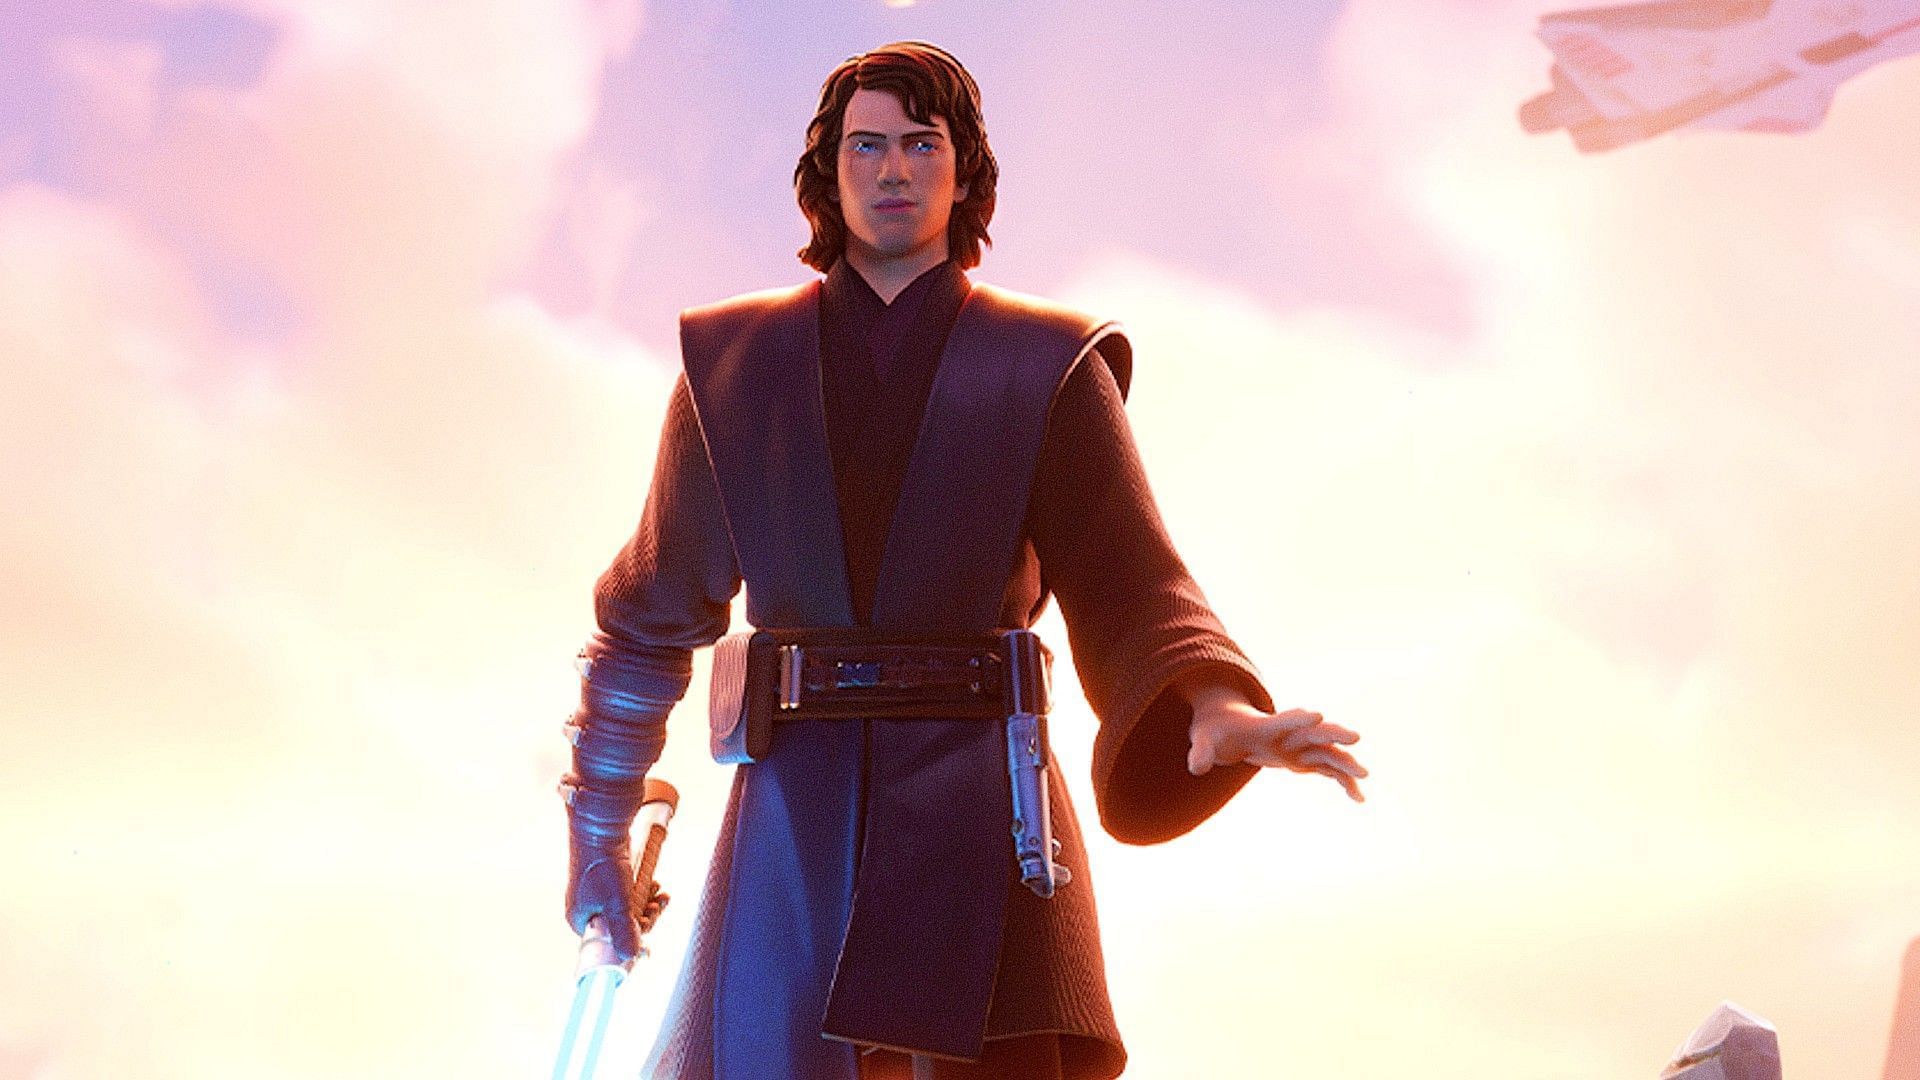 Anakin Skywalker in the game. (Image via Epic Games)